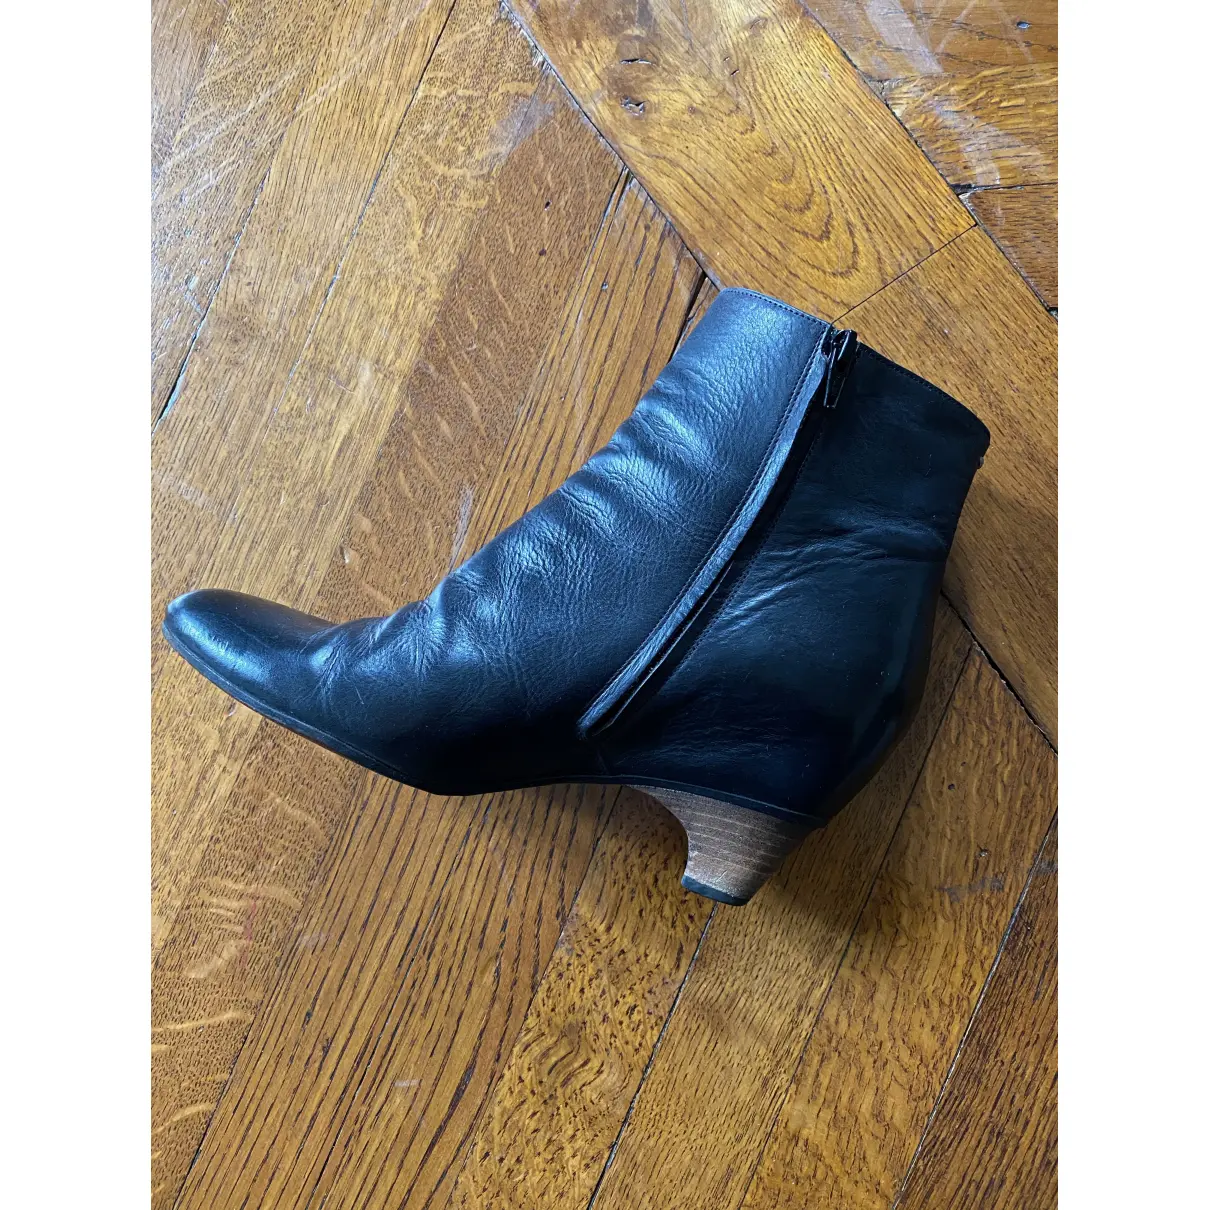 Leather ankle boots Maison Martin Margiela